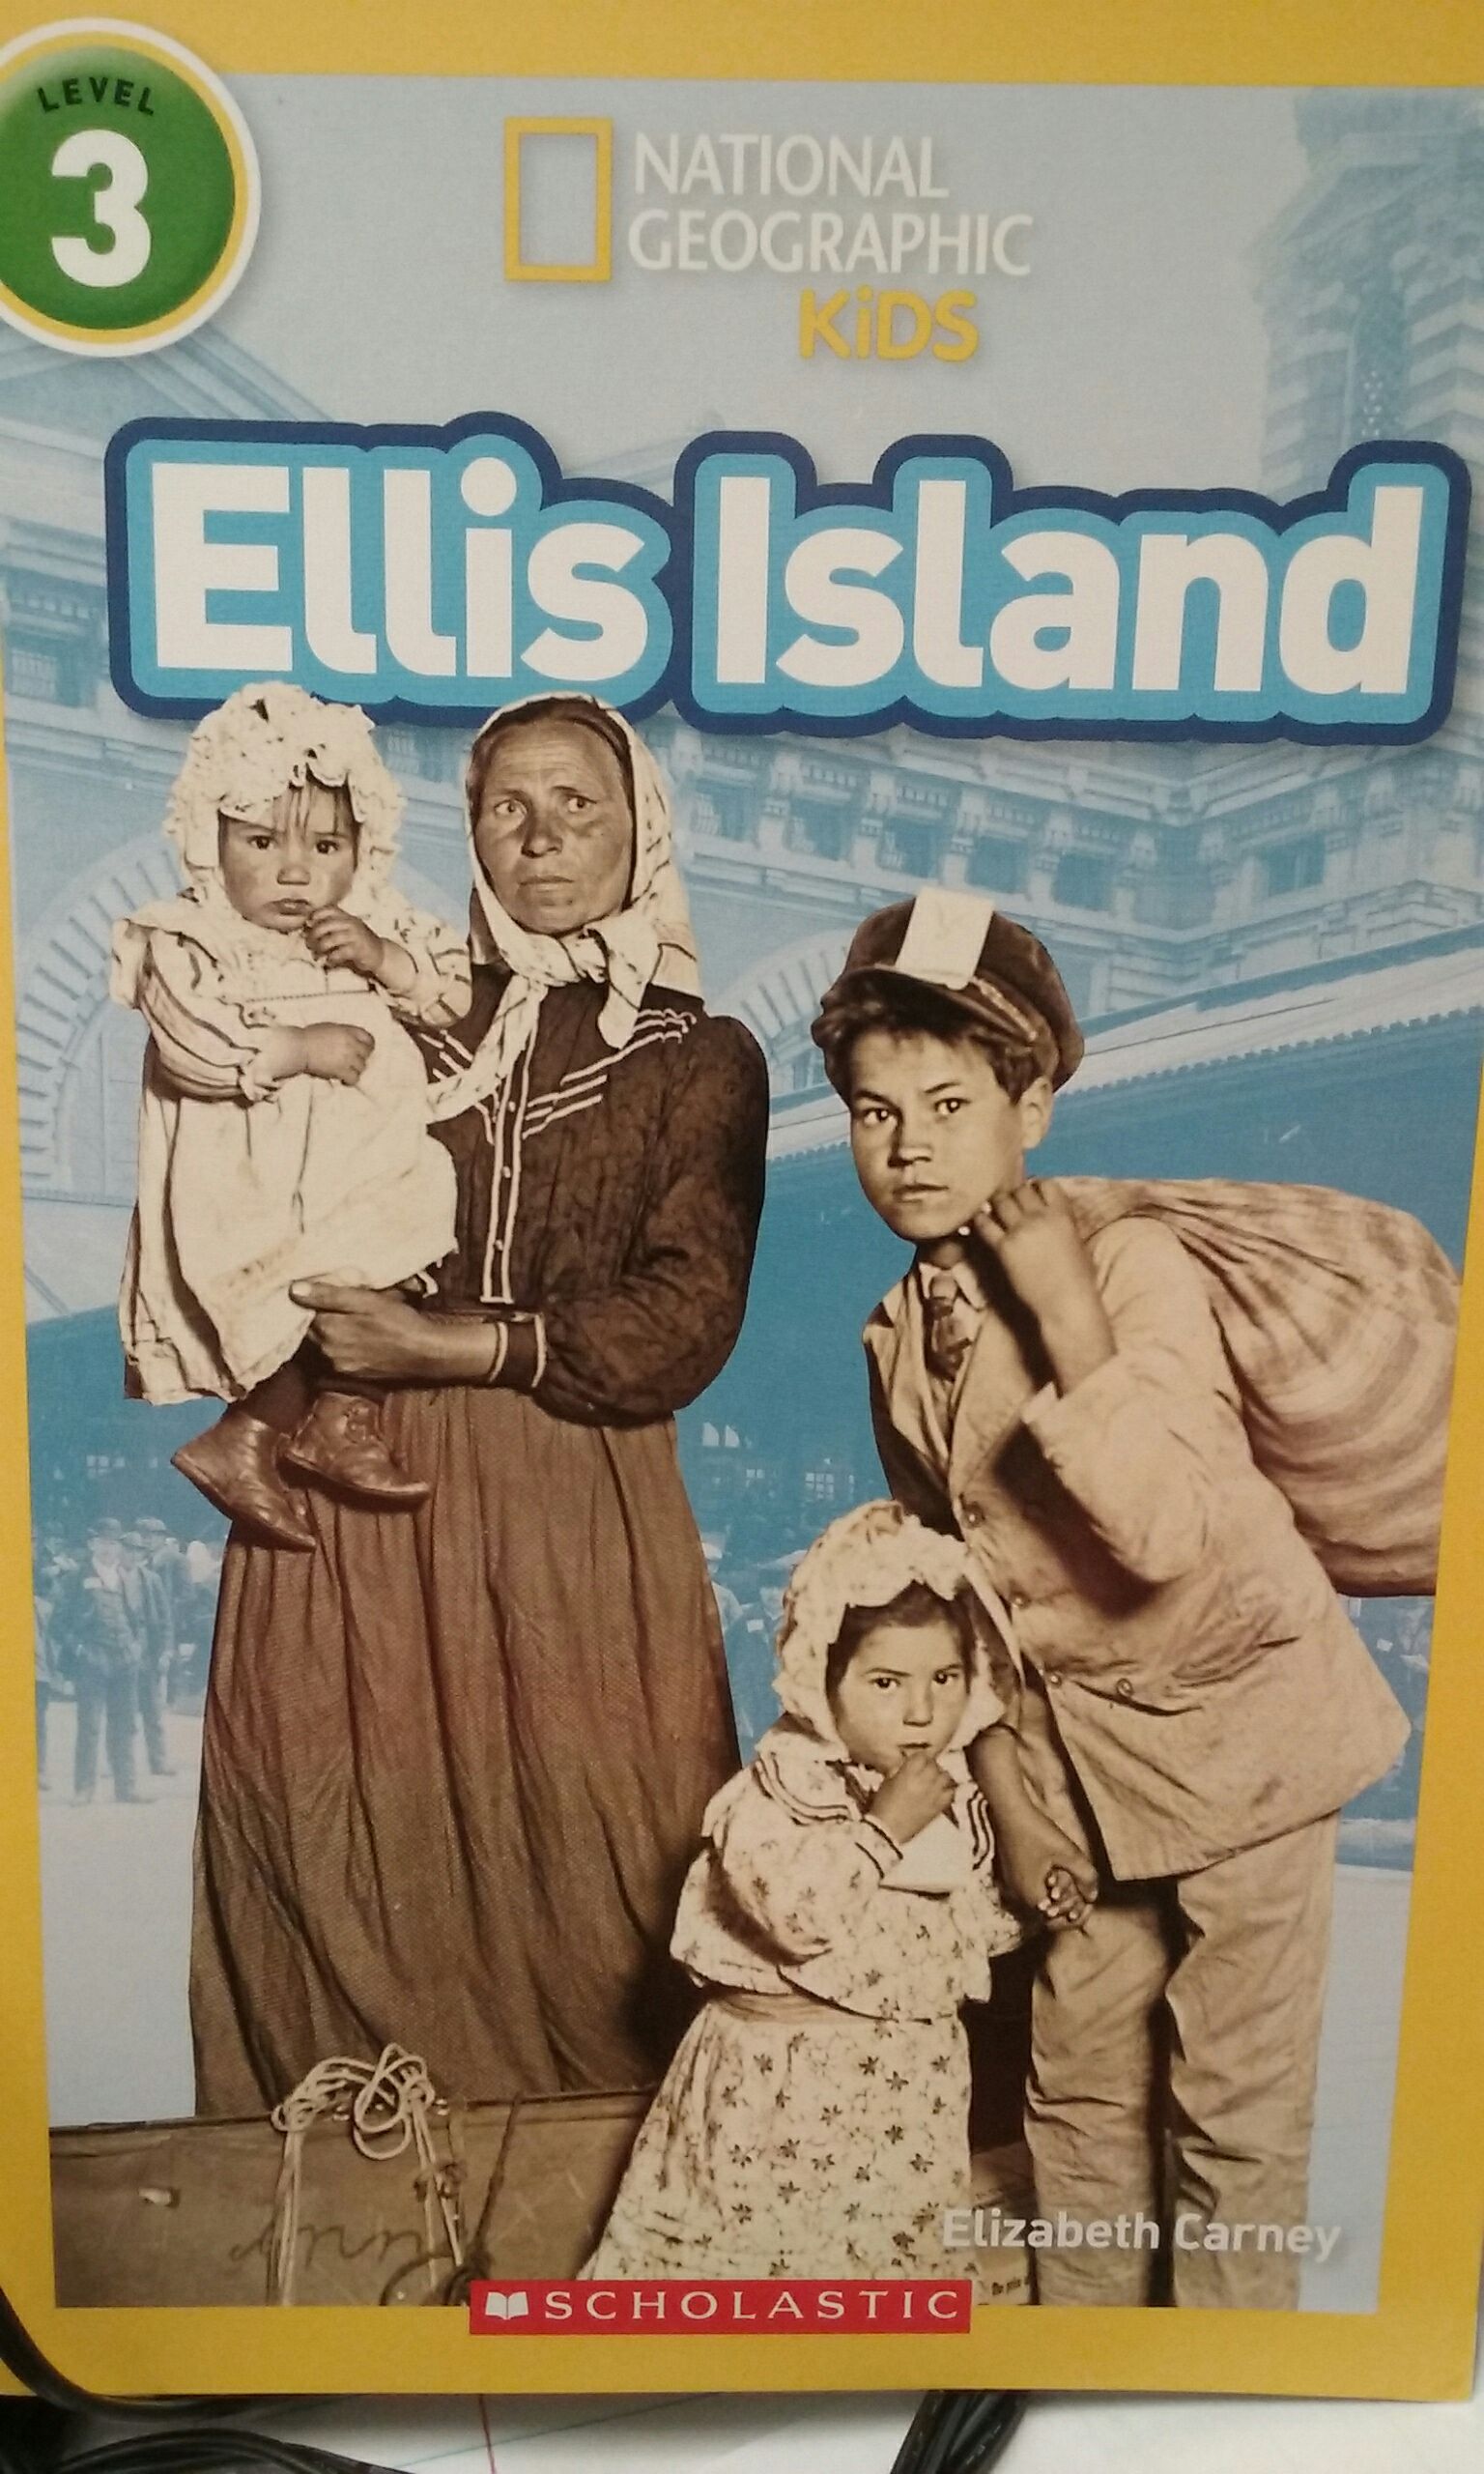 Ellis Island - Cynthia Klingel And Robert B Noyed (A Scholastic Press) book collectible [Barcode 9781338128420] - Main Image 1